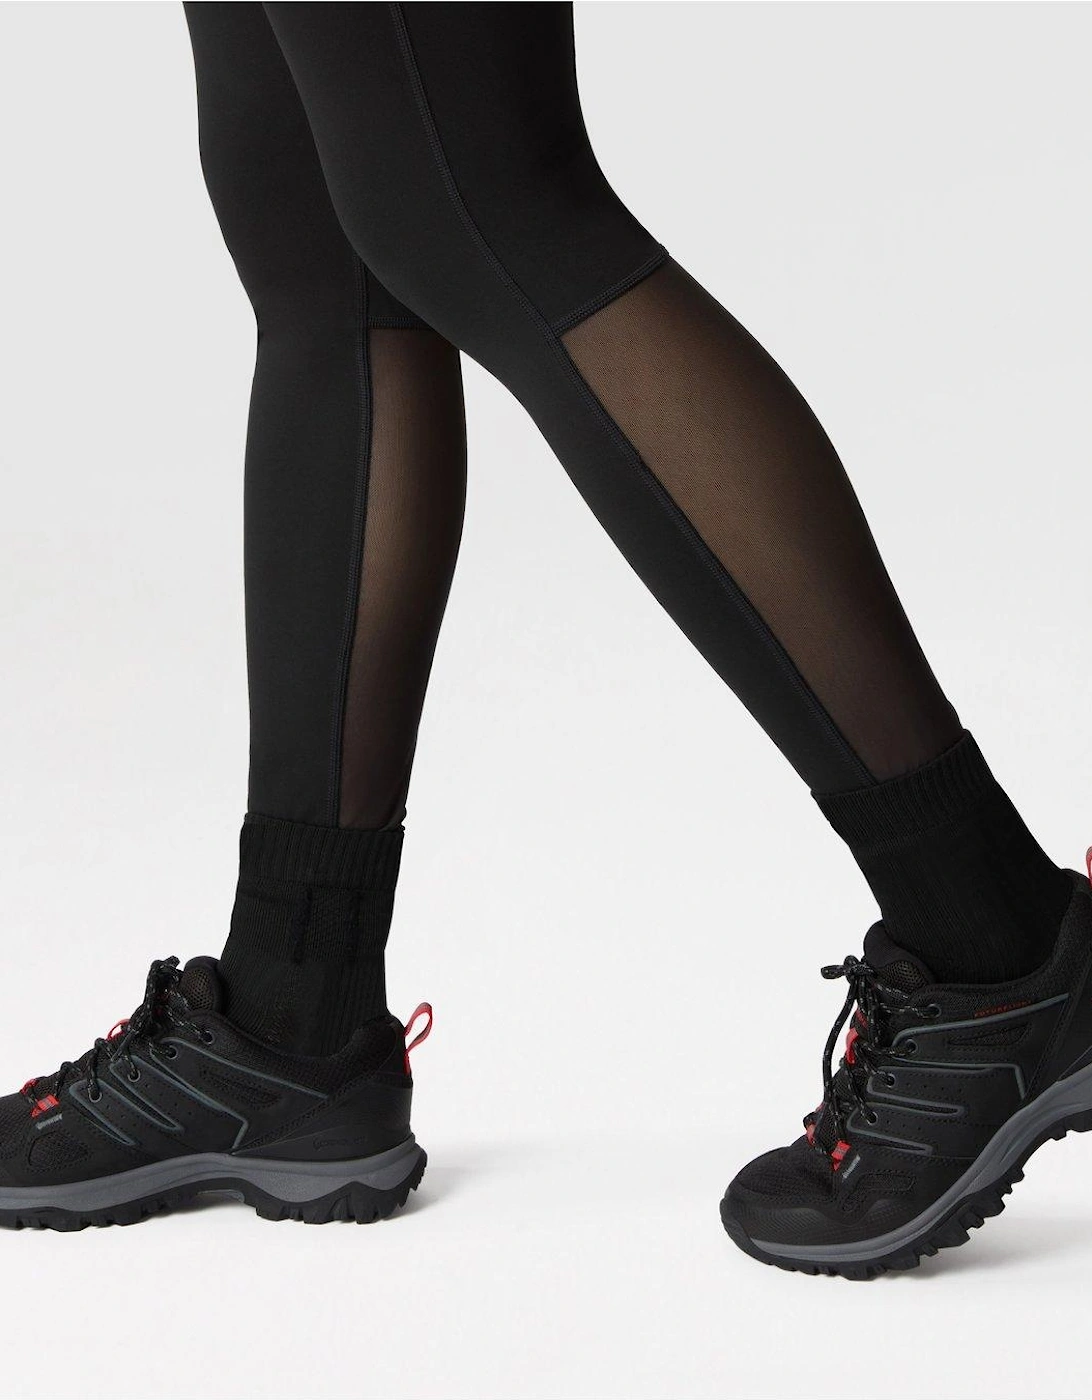 Women's Hedgehog Futurelight Hiking Shoes - Black/Red